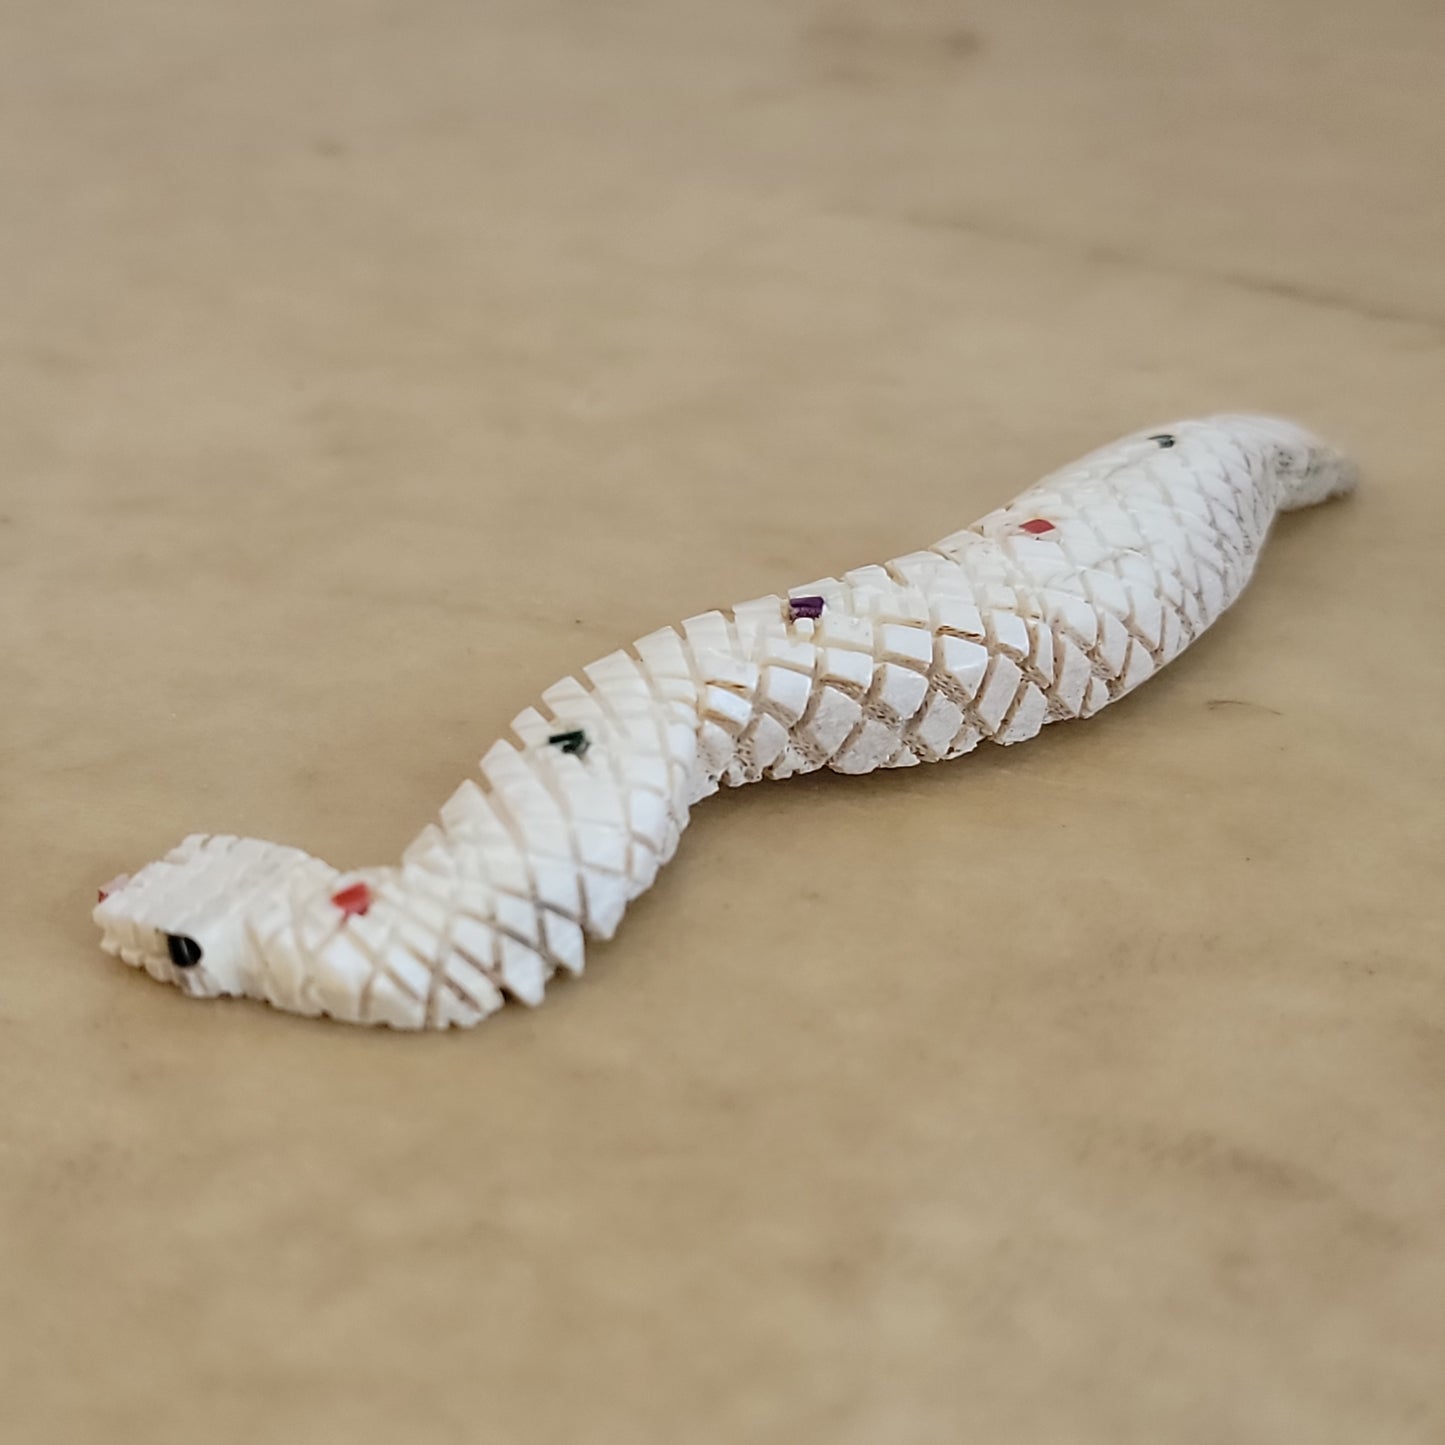 Carl Etsate Antler Snake/Rattlesnake Zuni Fetish